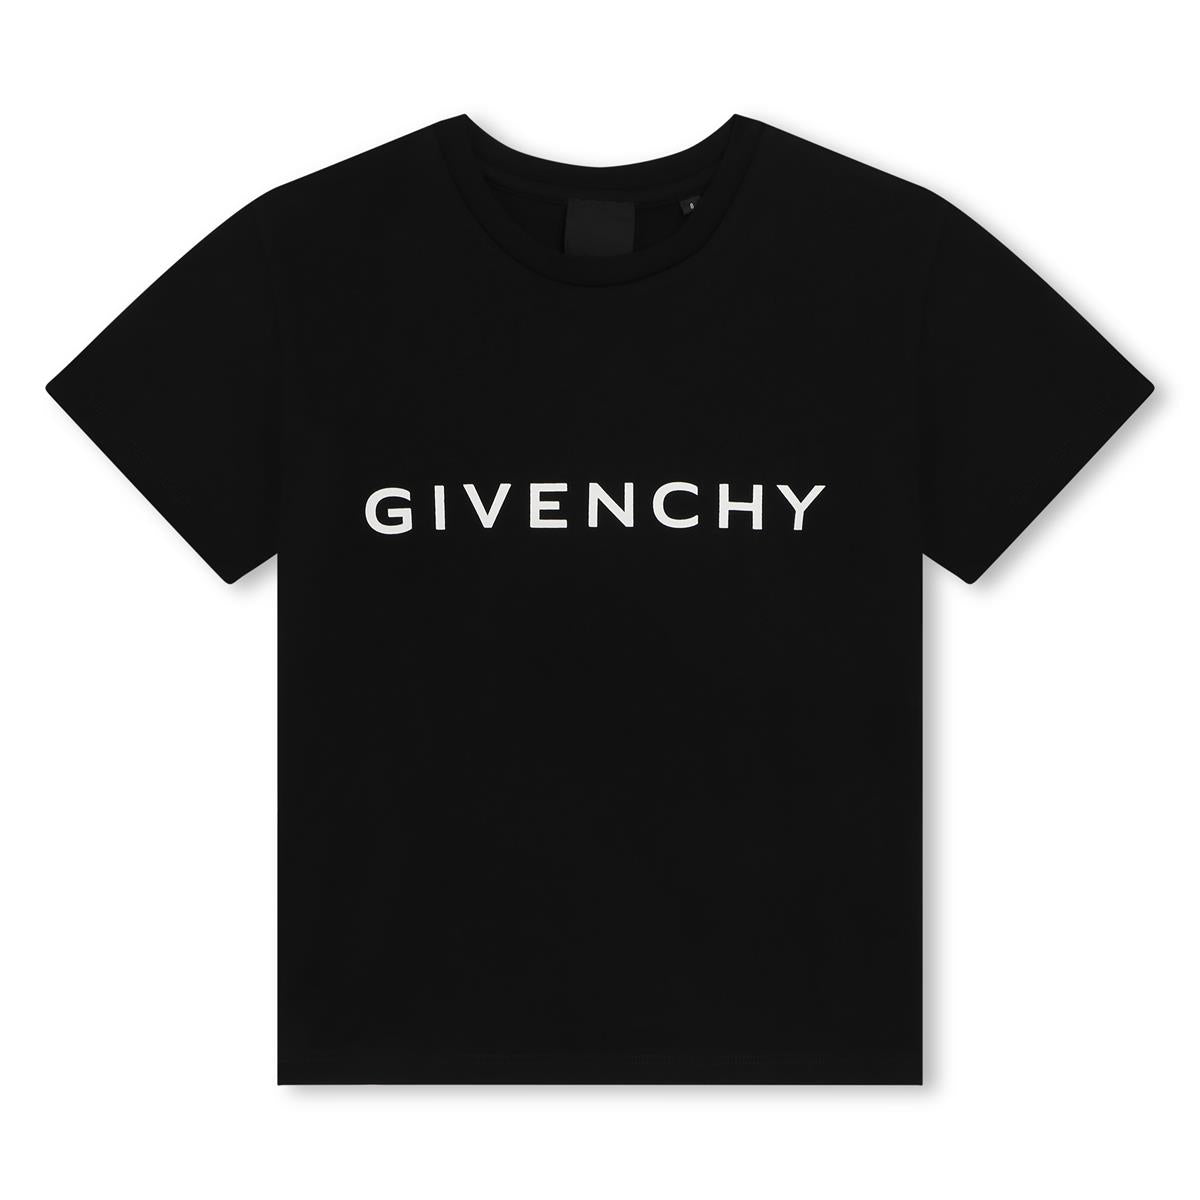 Girls Black Logo Cotton T-Shirt